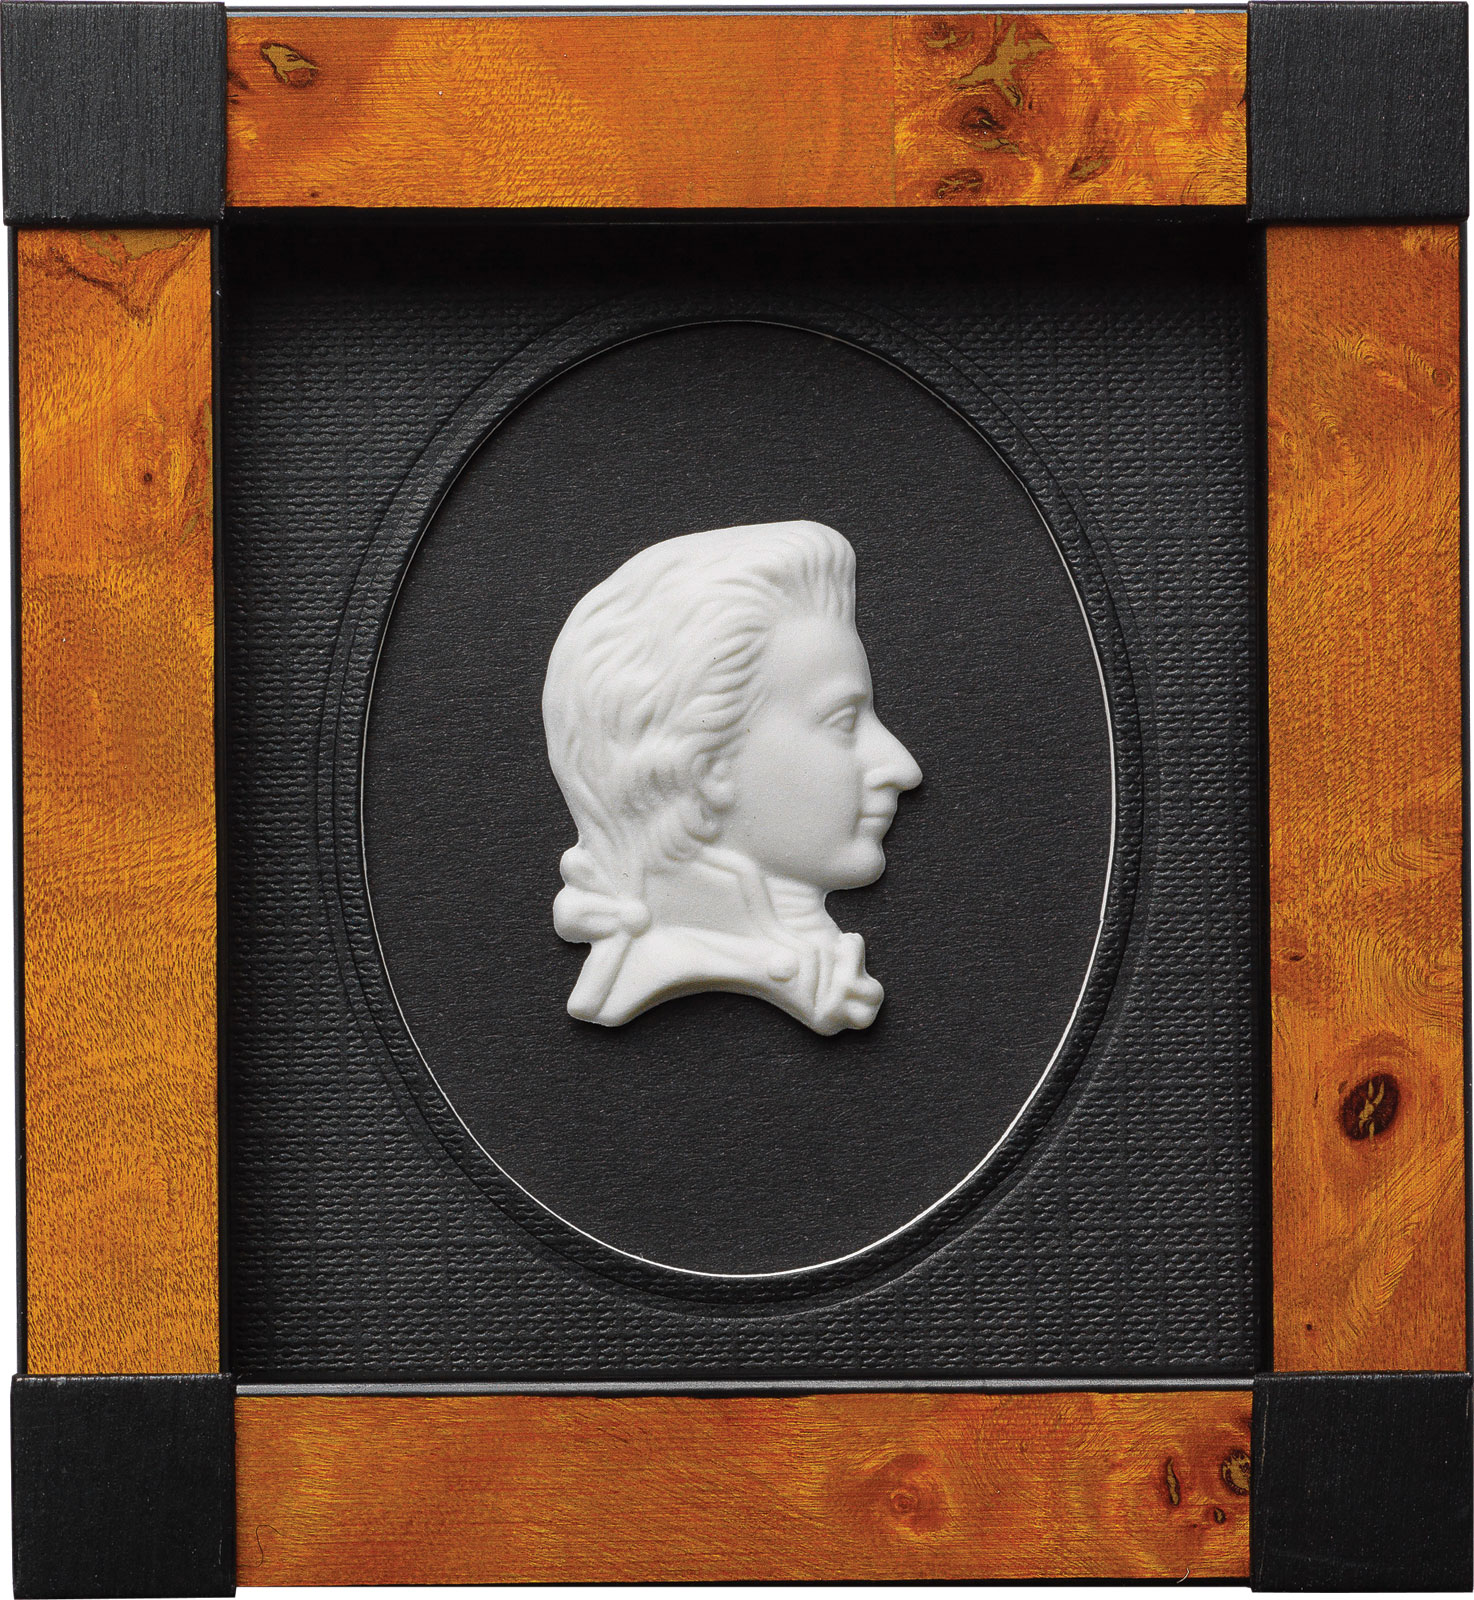 Miniatur-Porzellanbild 'Wolfgang Amadeus Mozart', gerahmt